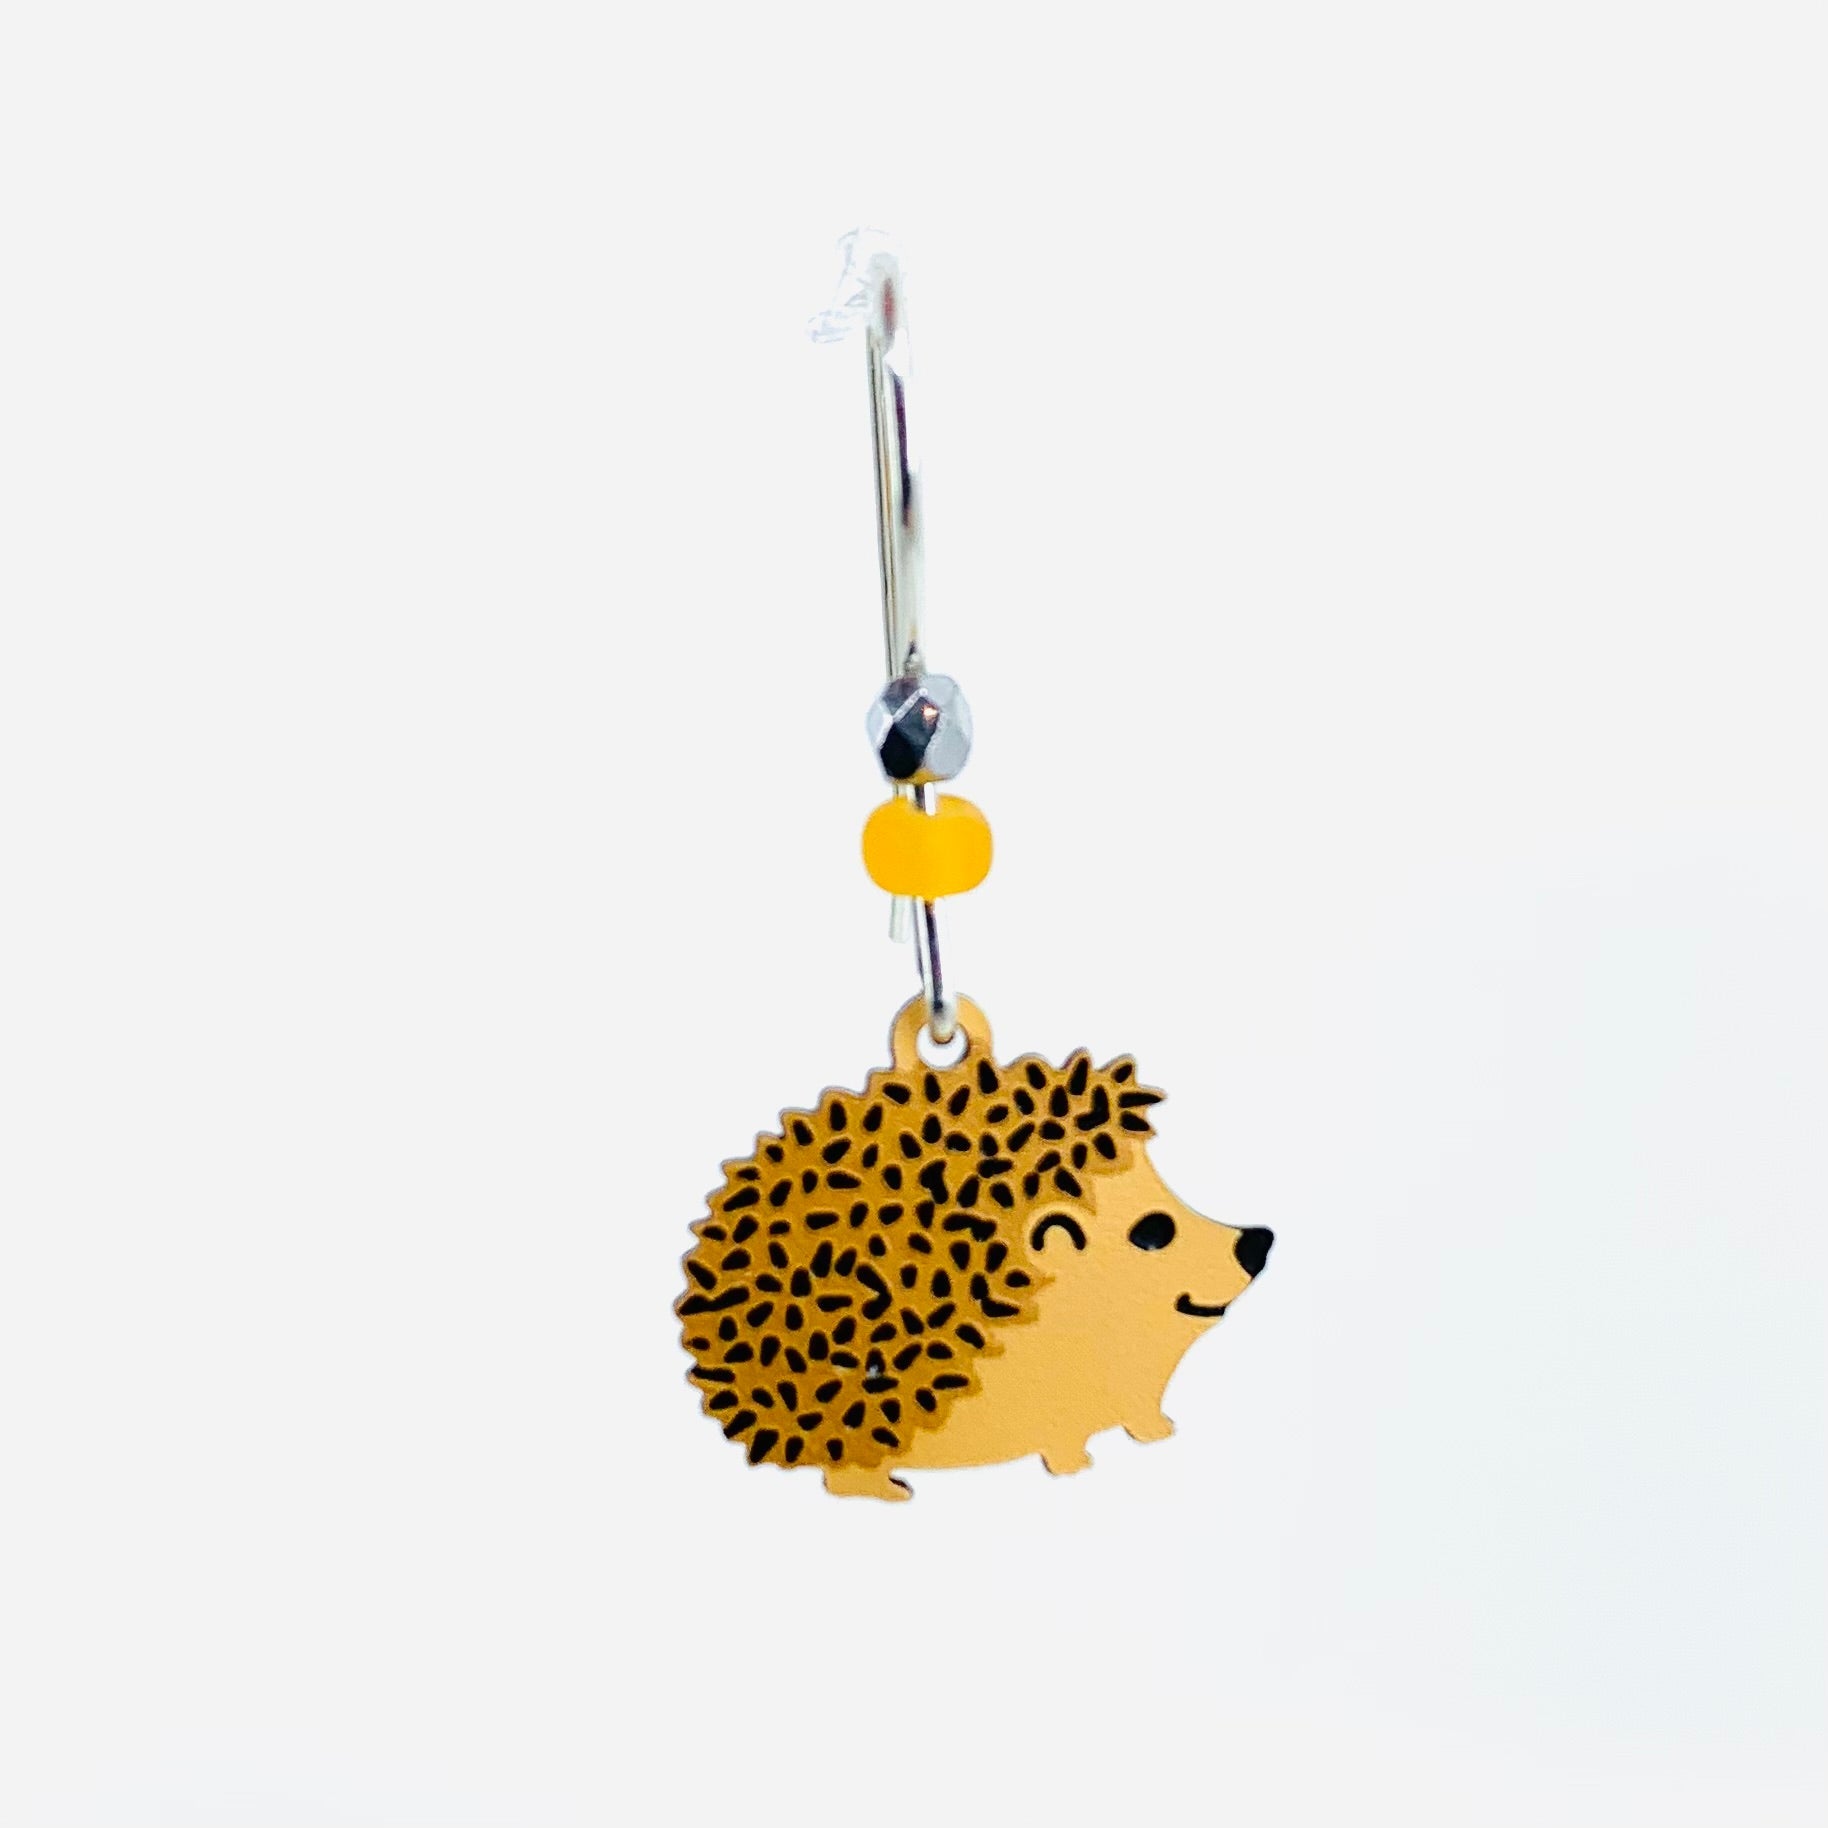 Tiny Whimsical Earrings, Hedgehog Sienna Sky 